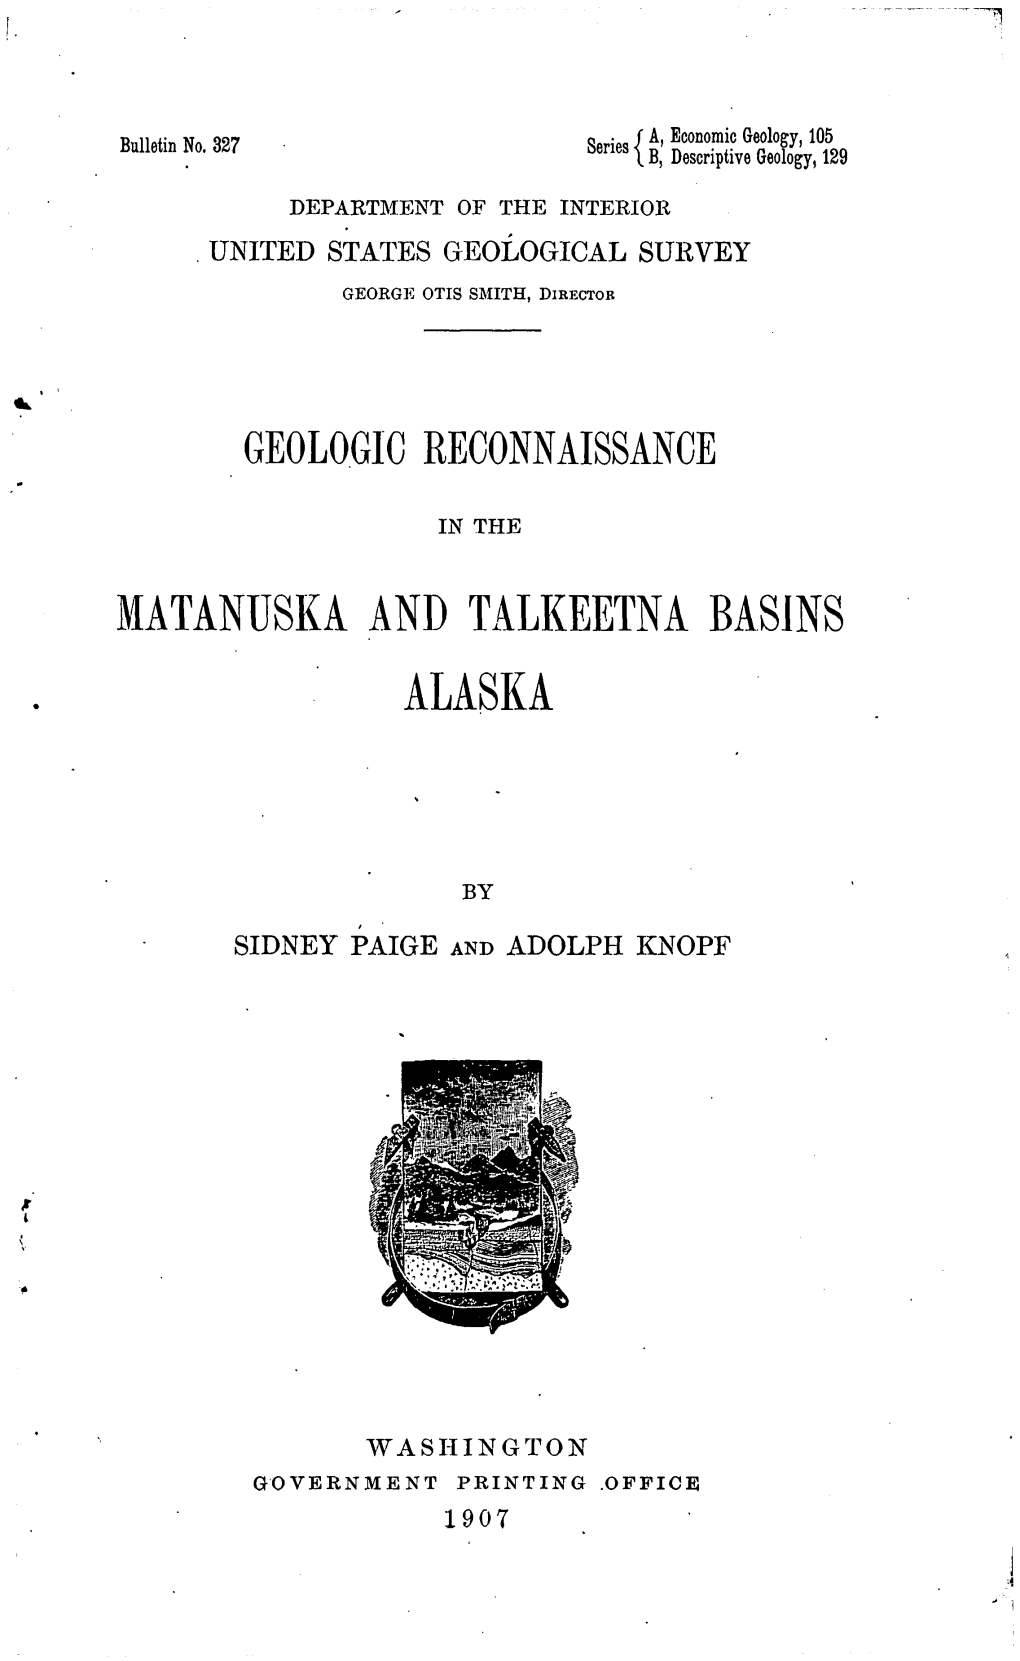 Matanuska and Talkeetna Basins Alaska